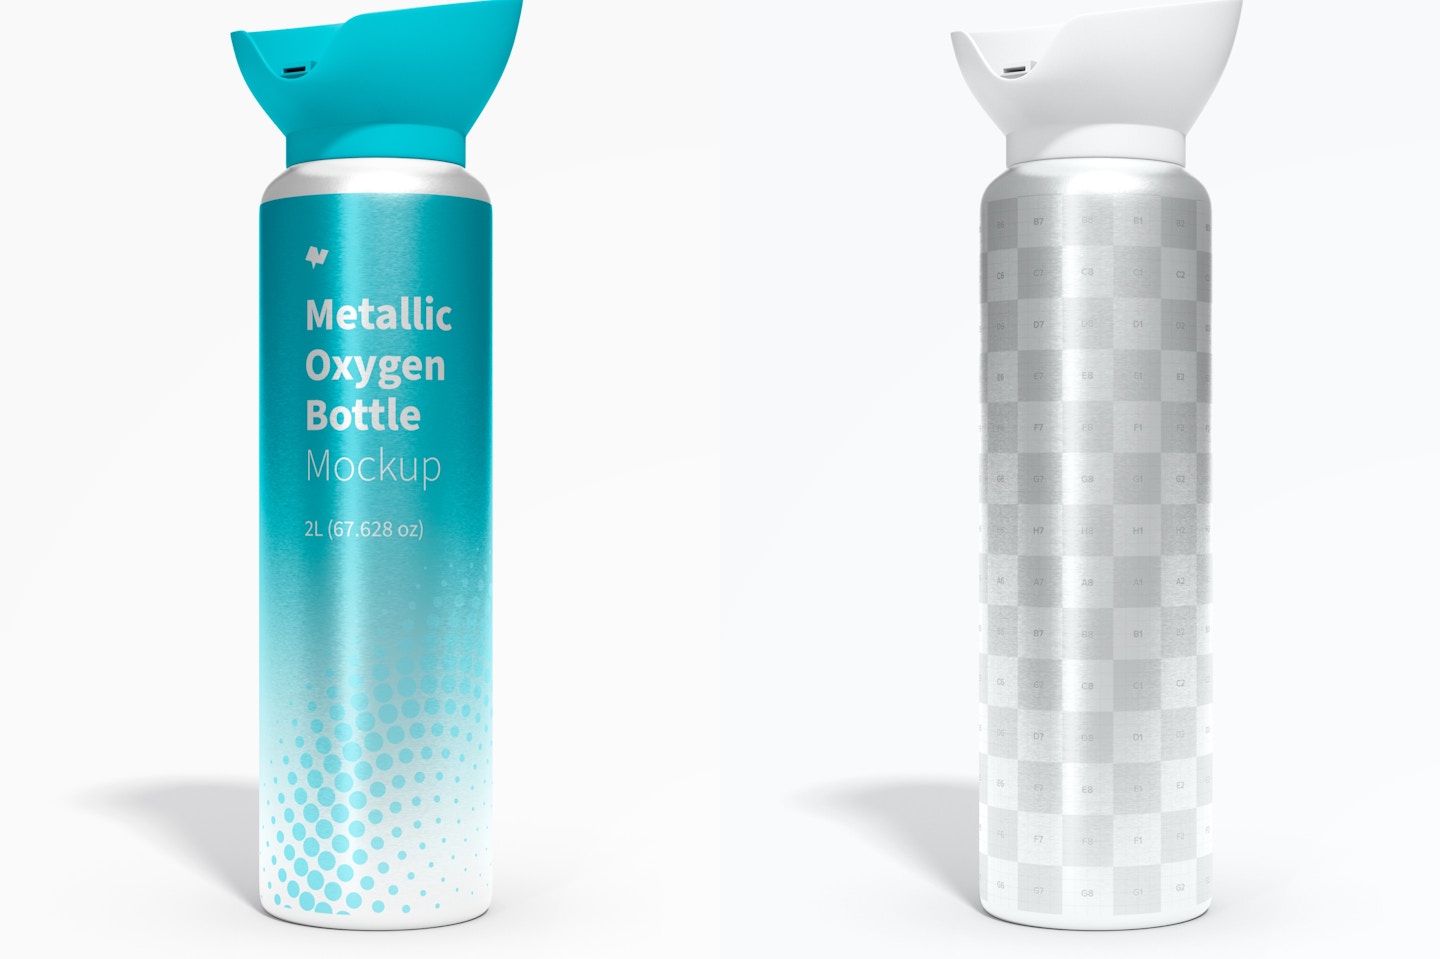 Metallic Oxygen Bottle Mockup